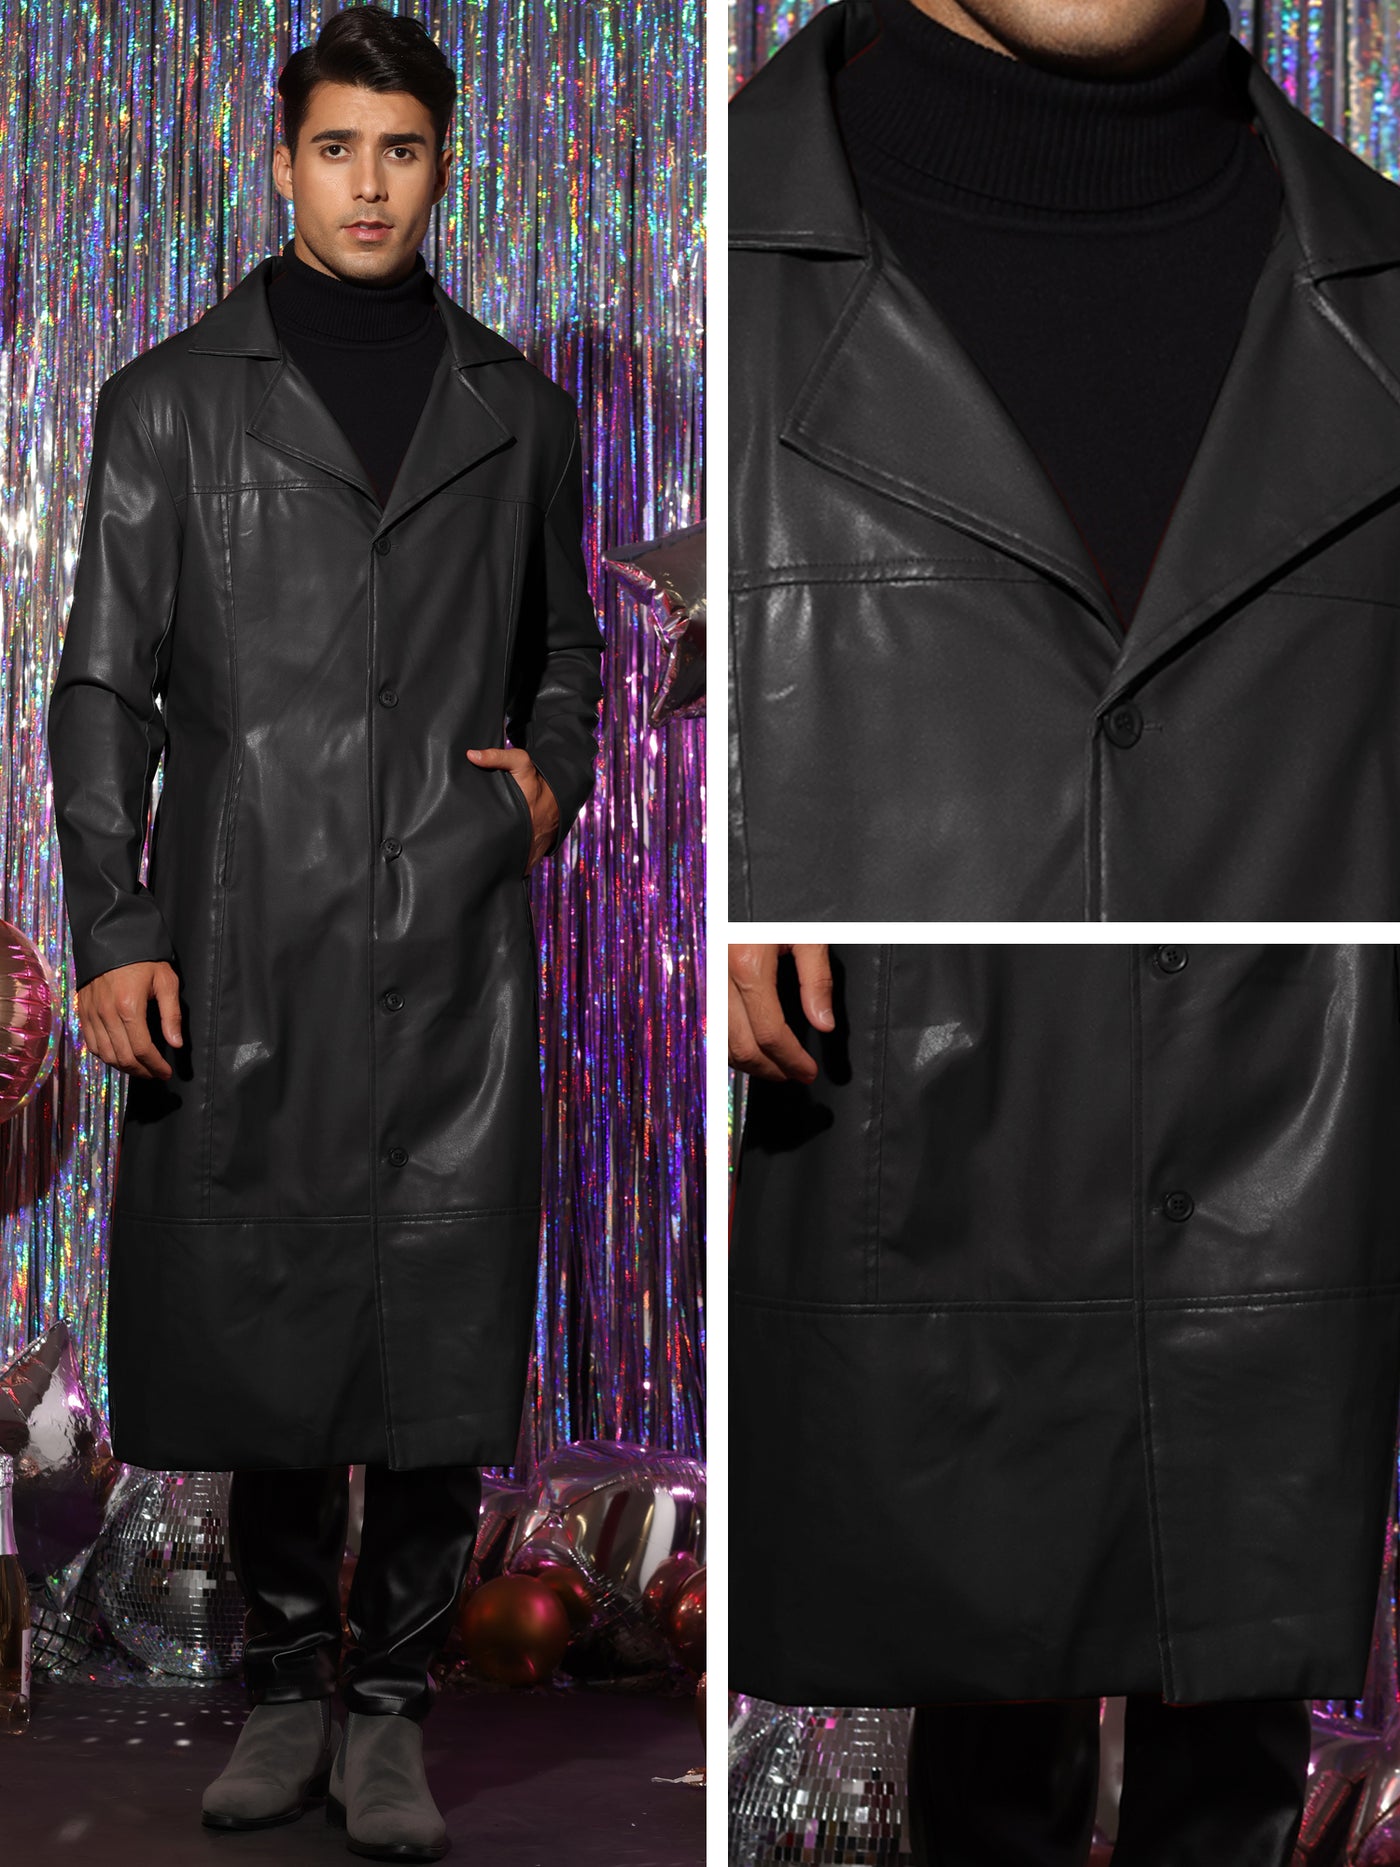 Bublédon PU Faux Leather Long Jacket for Men's Vintage Lapel Gothic Trench Coat Outwear